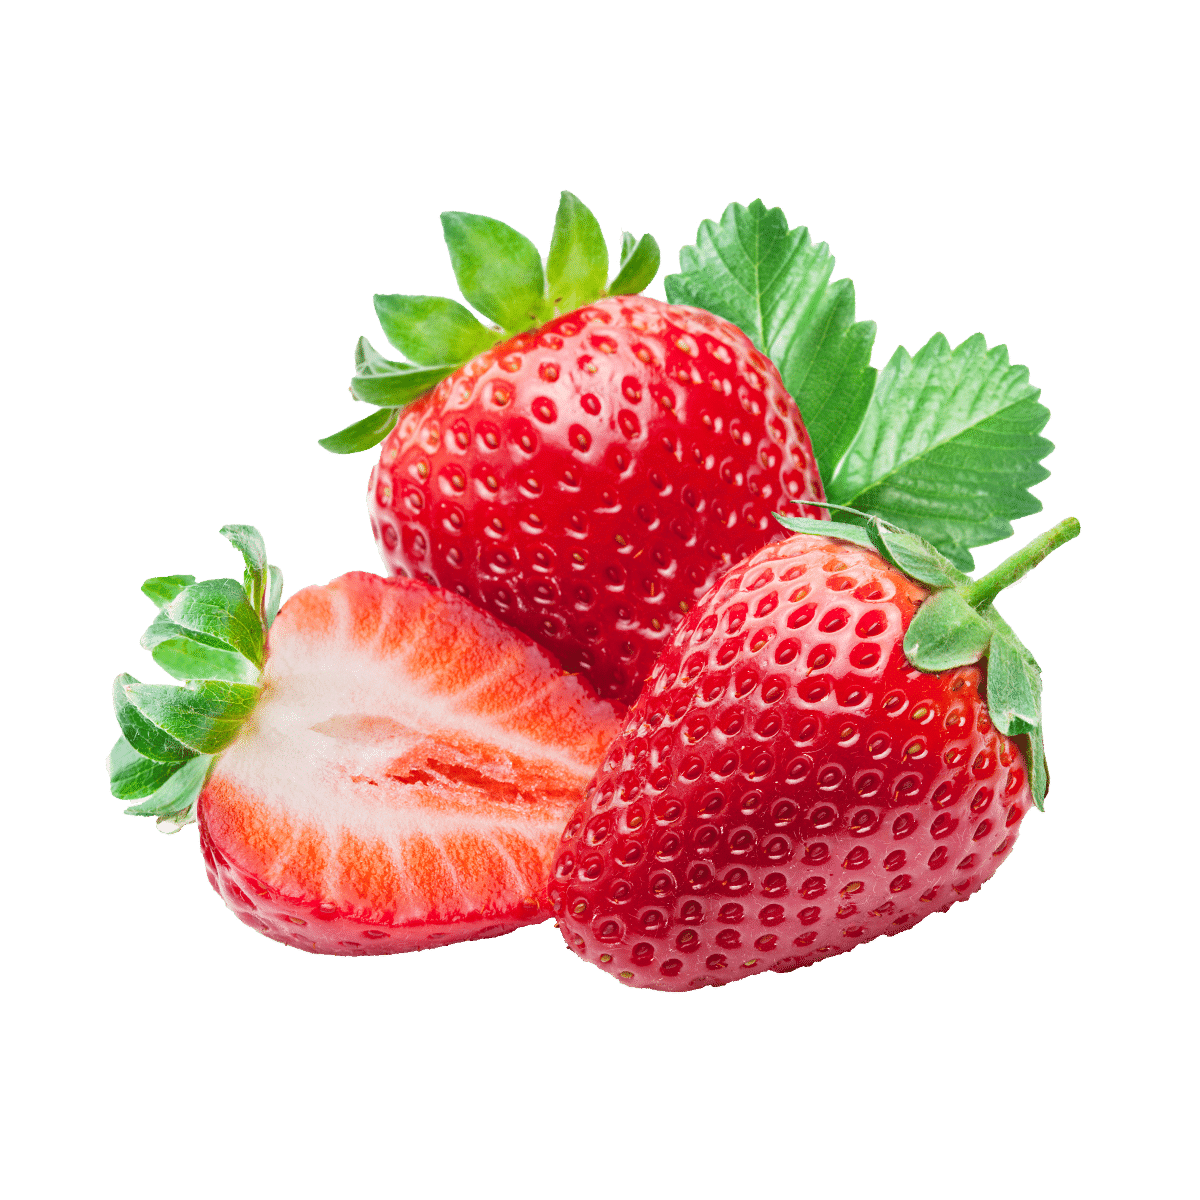 https://binksberryhollow.com/wp-content/uploads/2021/12/strawberries.png